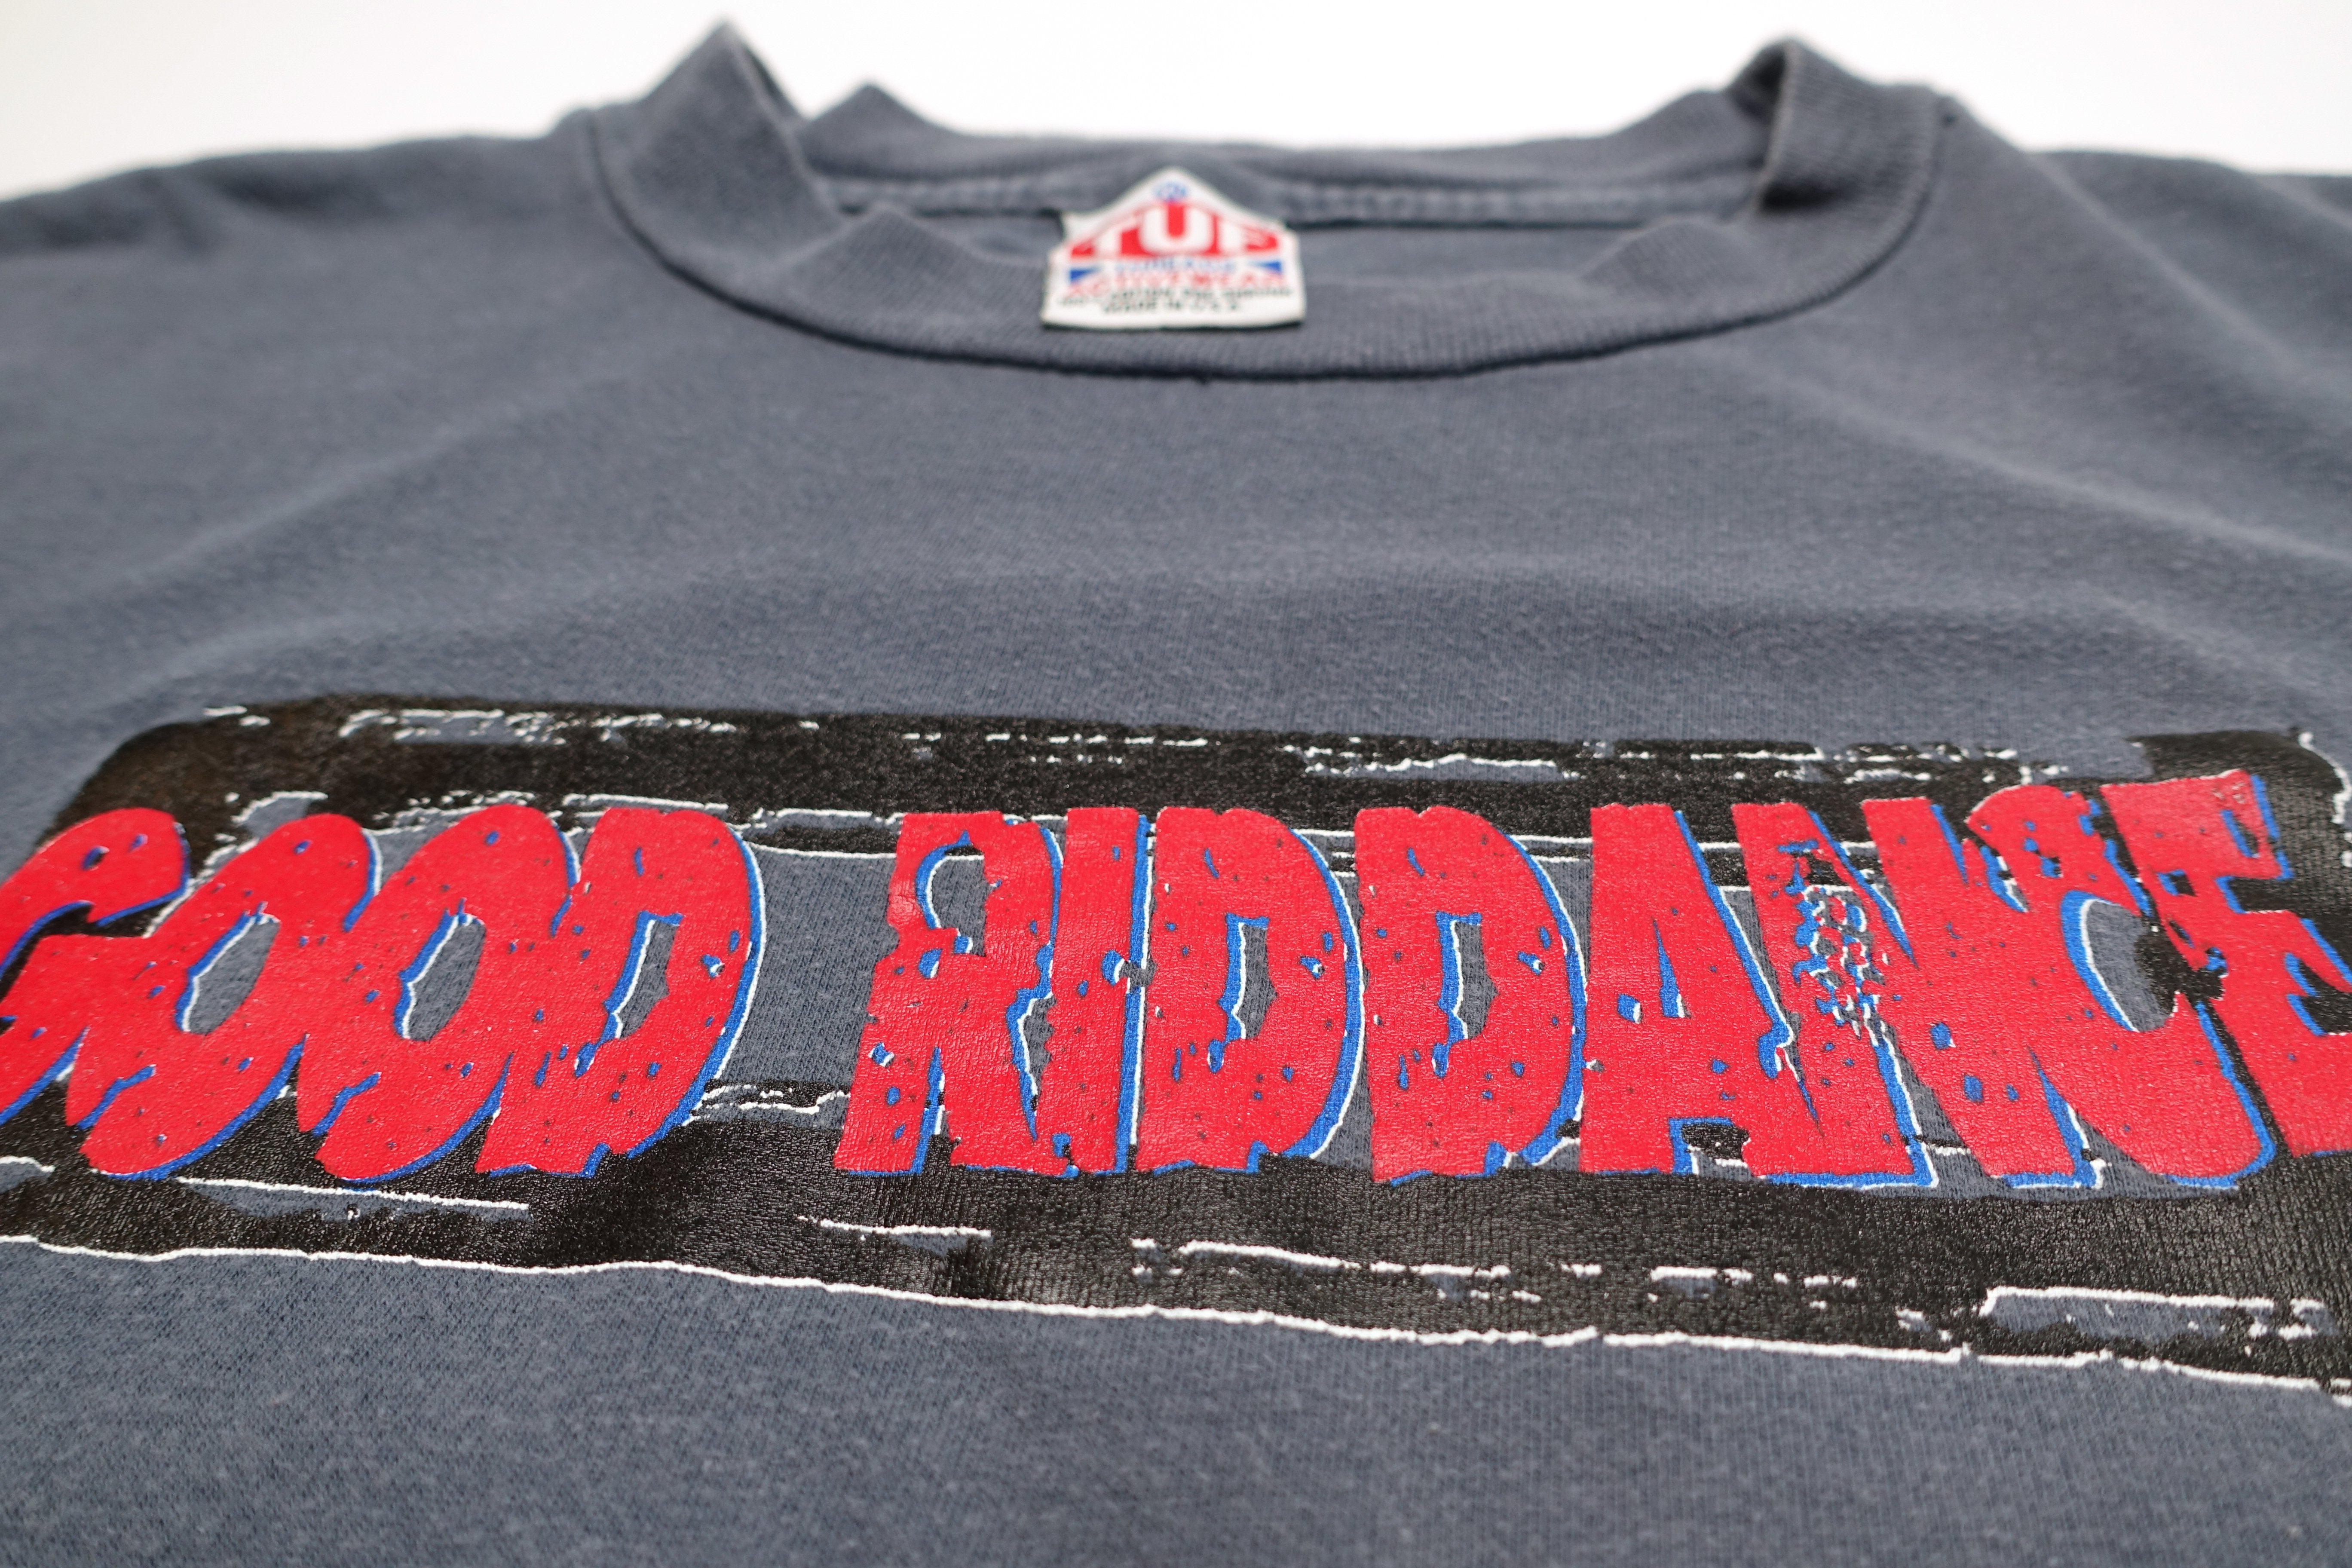 Good Riddance - A Comprehensive Guide To Moderne Rebellion 1996 Tour Shirt (Grey / Blue)Size XL